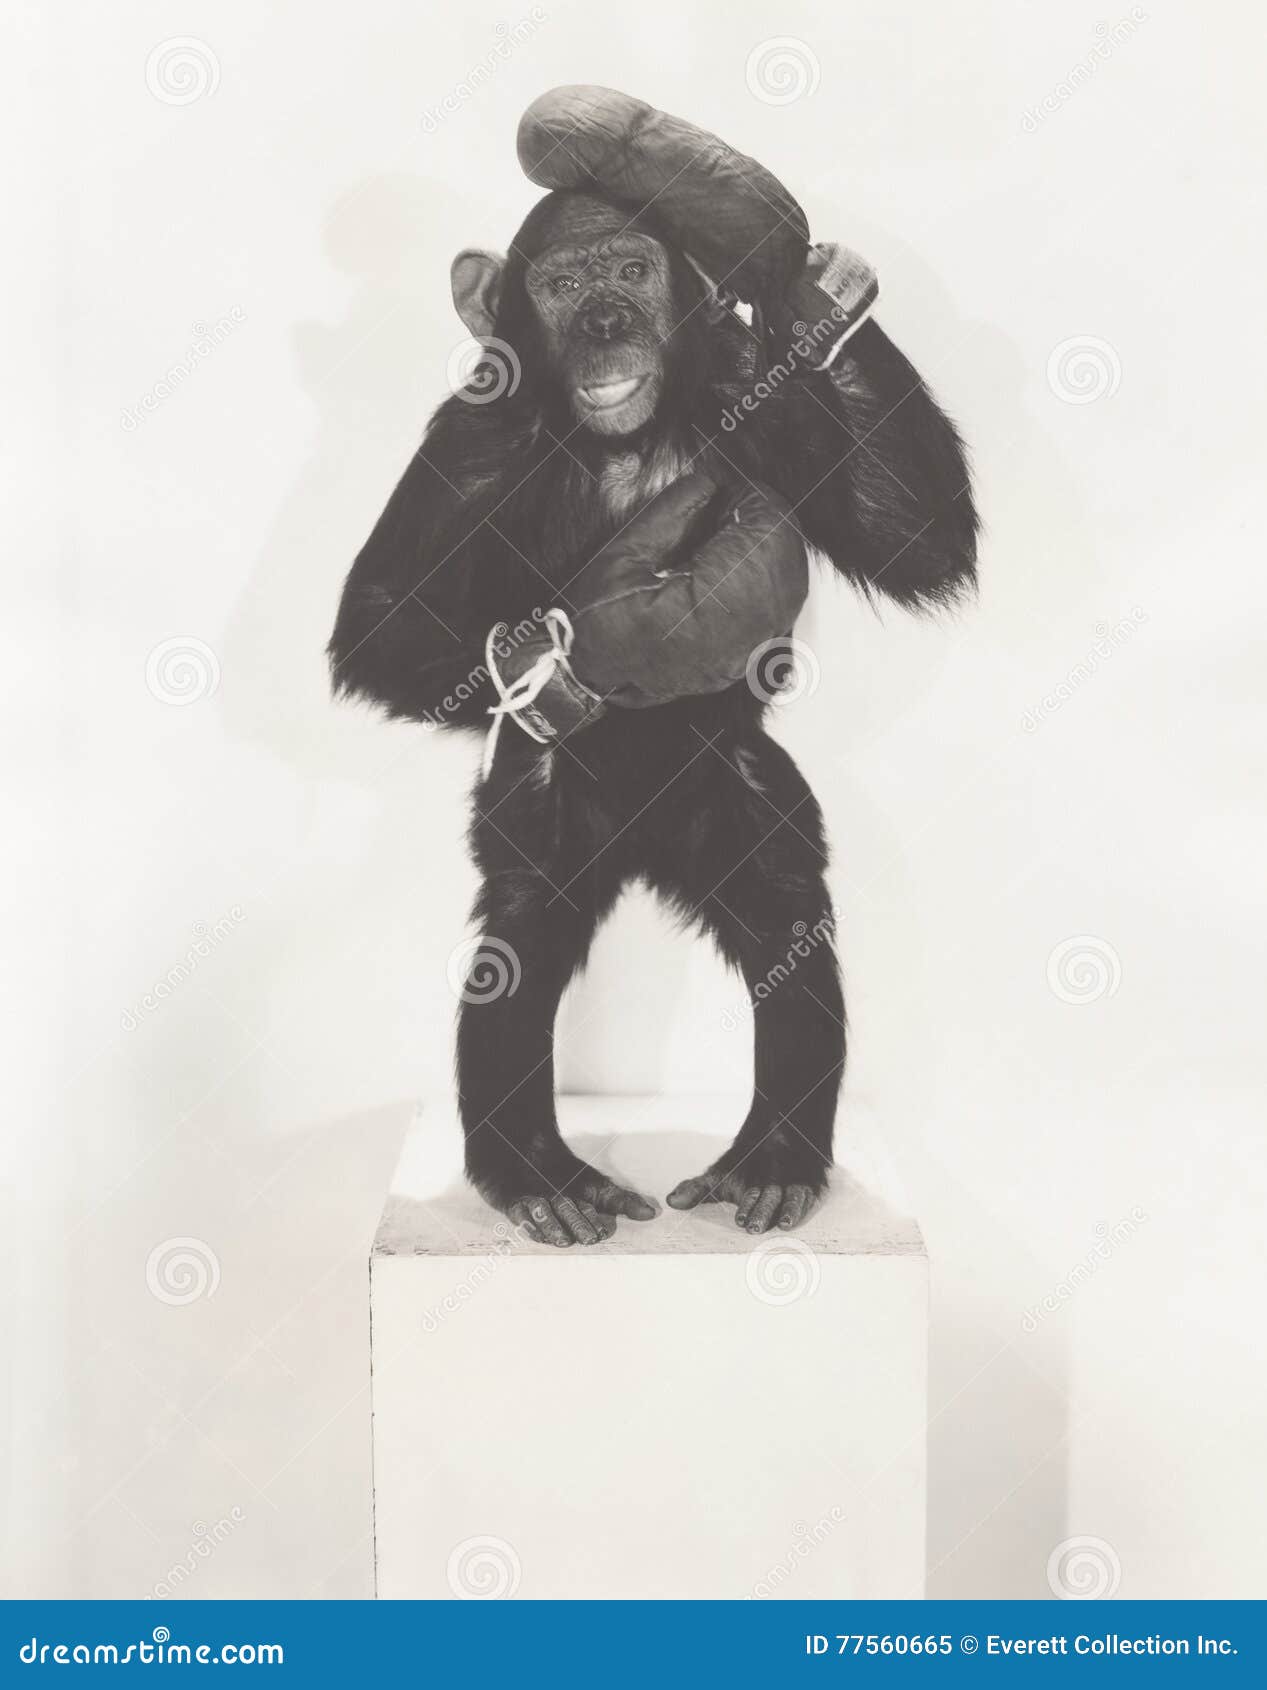 Boxing Monkey Stock Photos